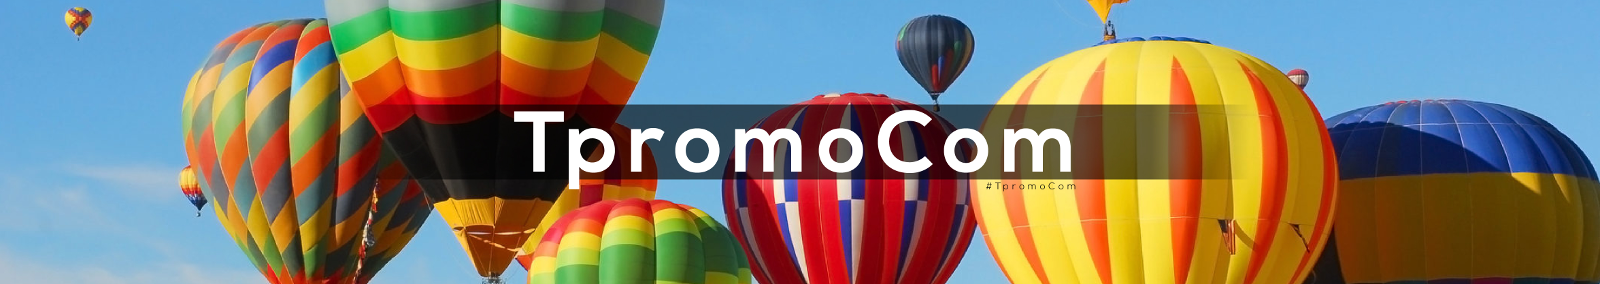 TpromoCom, Web Designer with Hosting, Content and Social Media Services